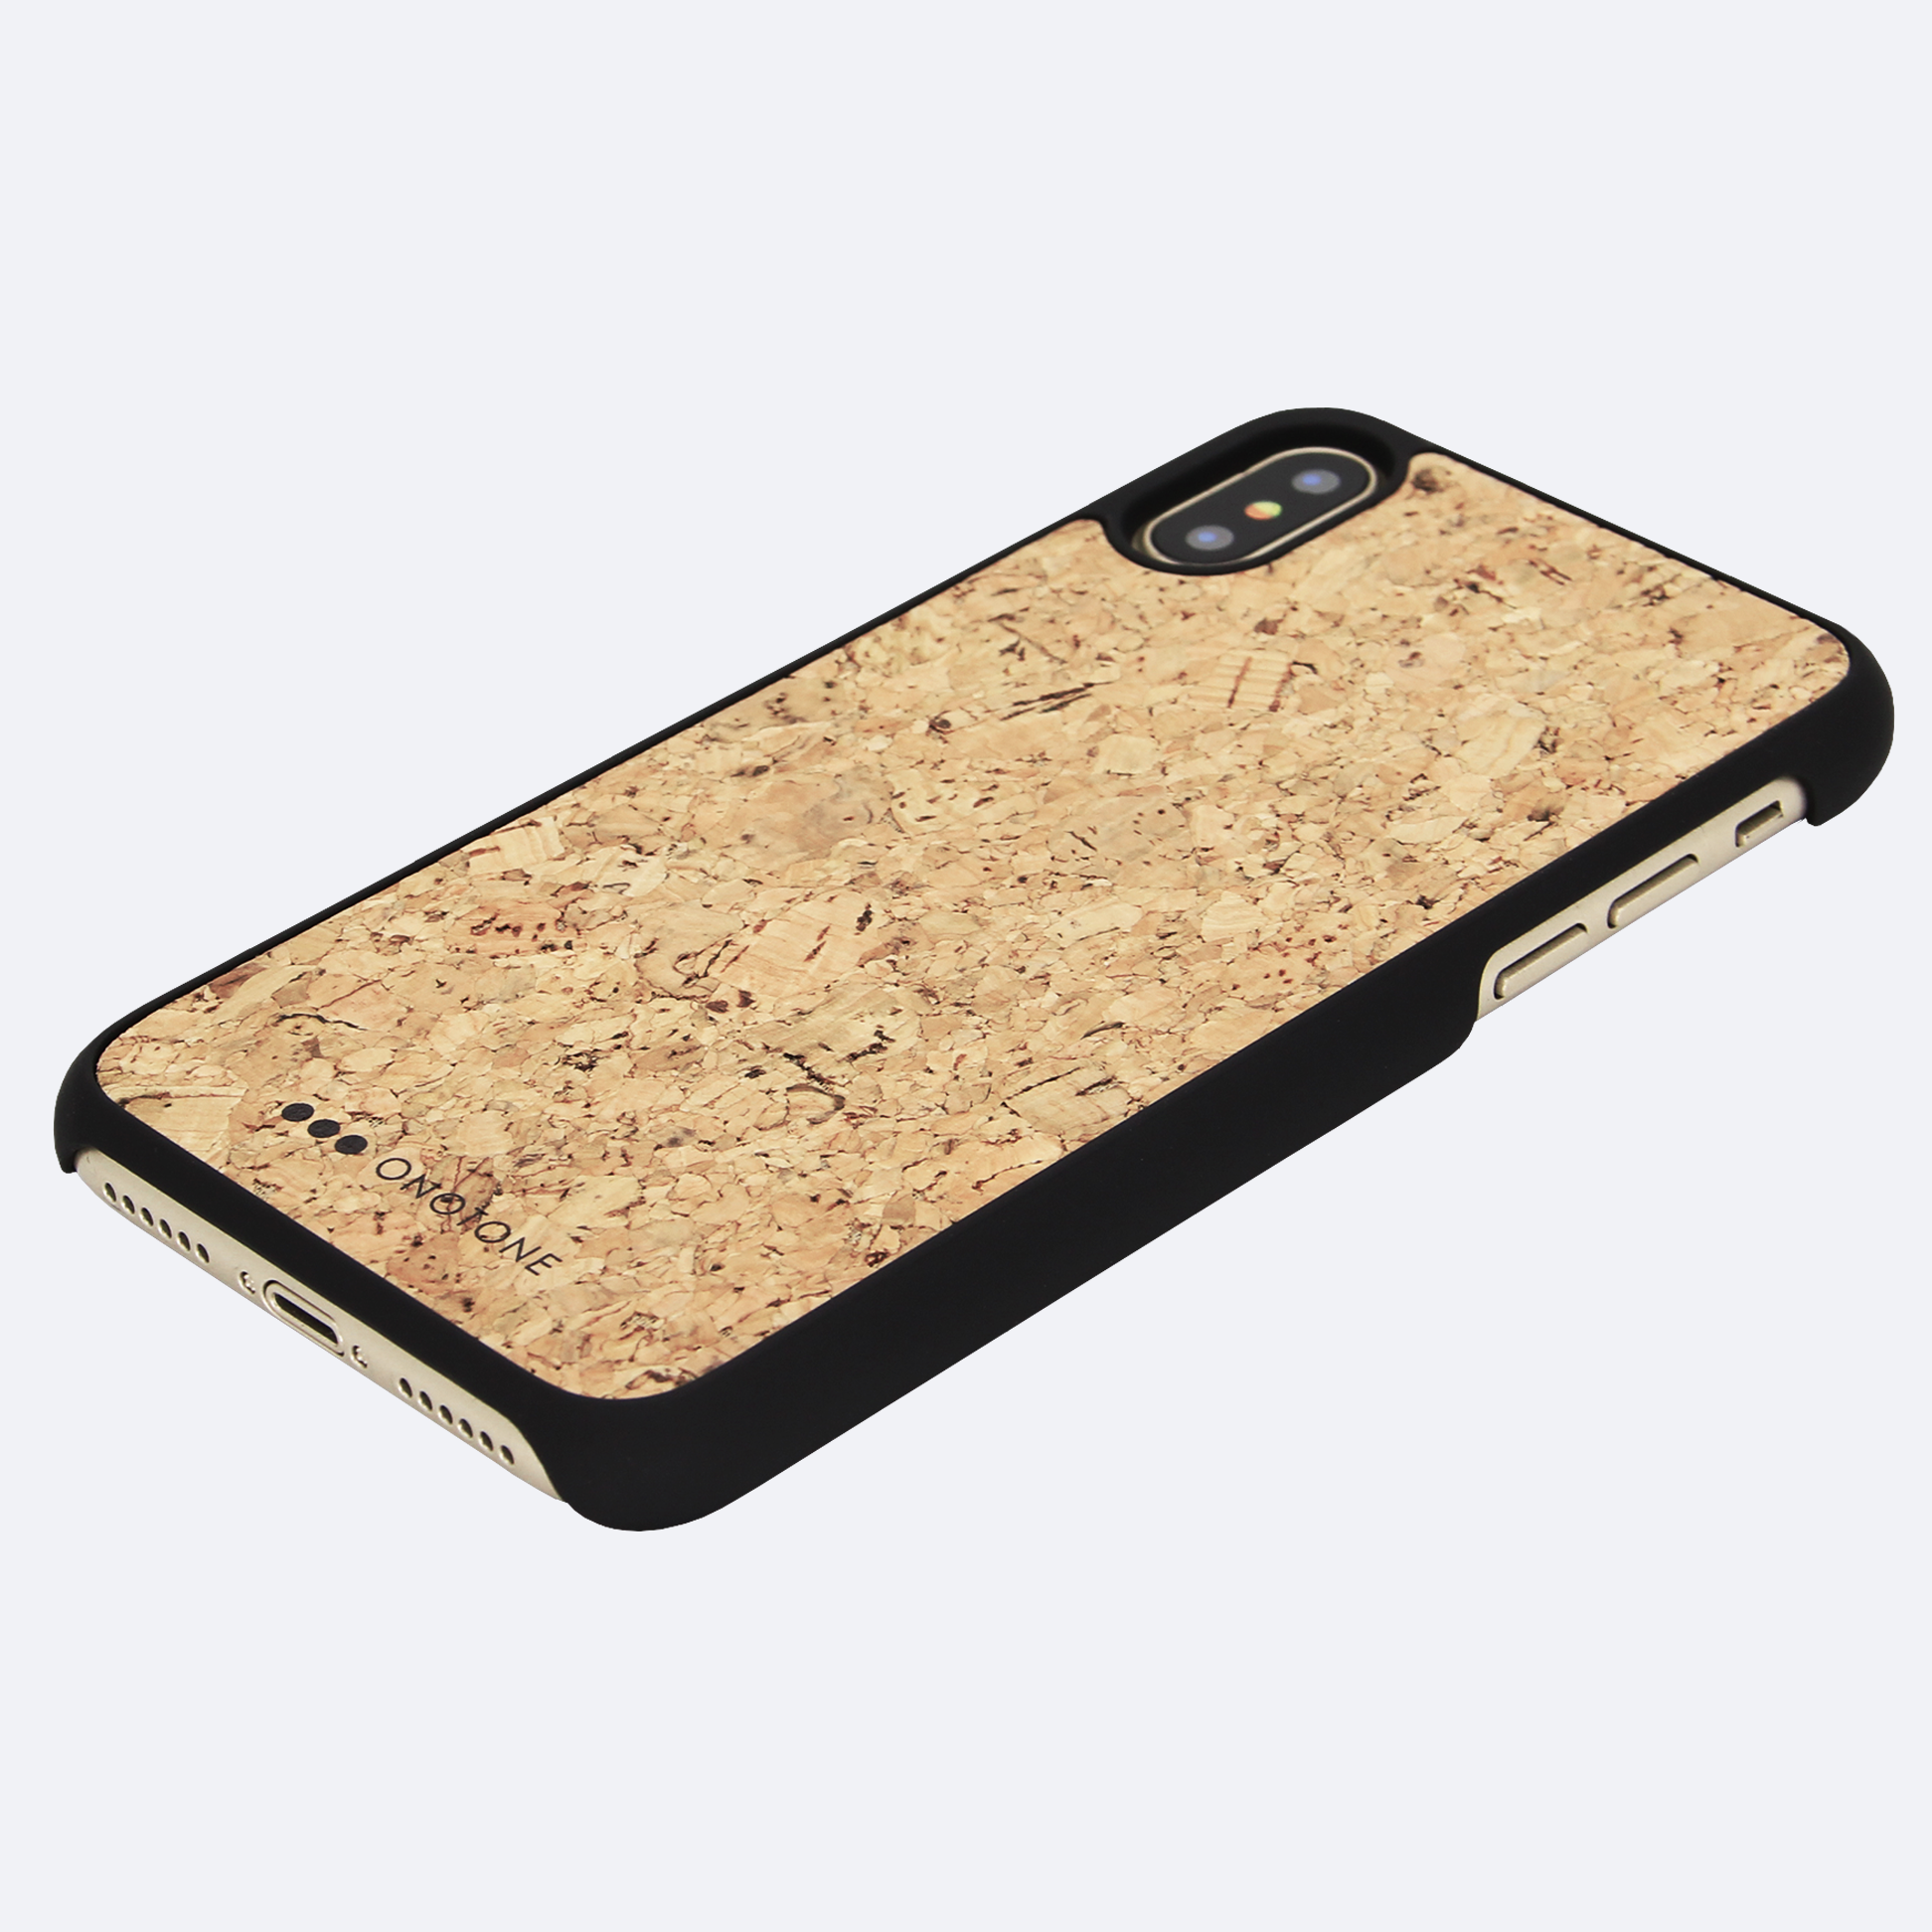   Cork iPhone cases